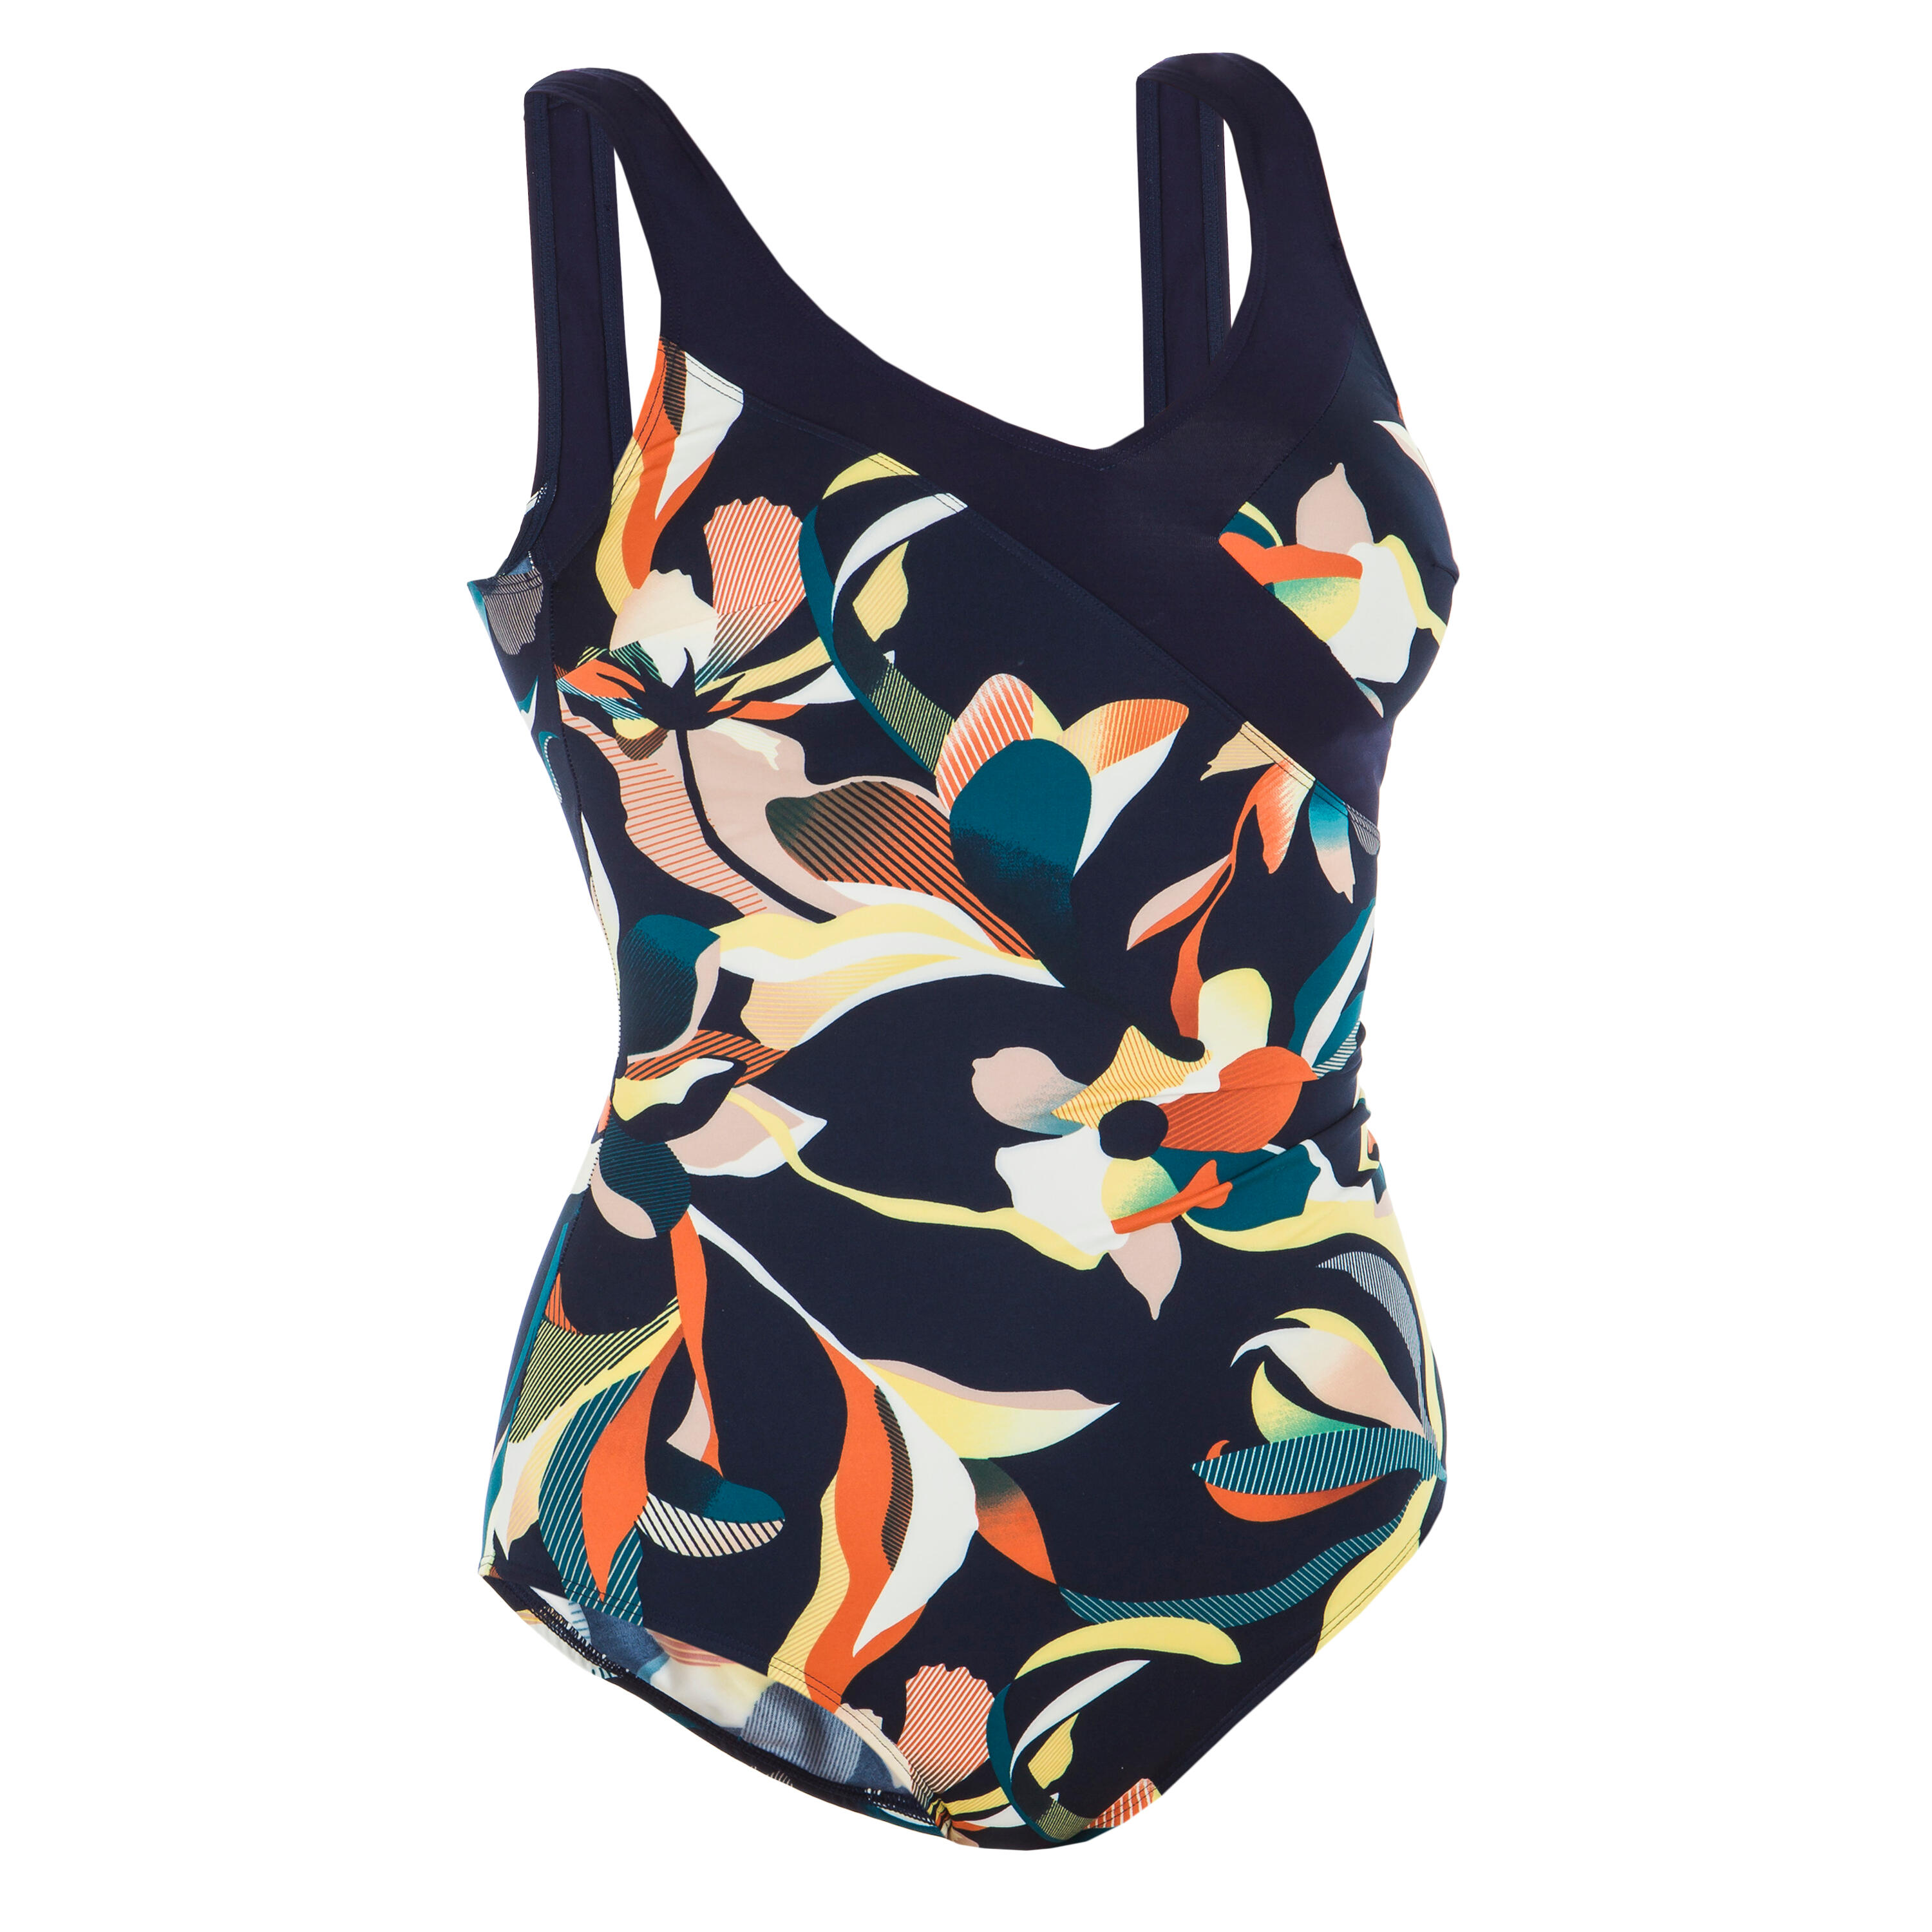 Women's 1-Piece Aquafitness Swimsuit - Karli Black/Orange - NABAIJI